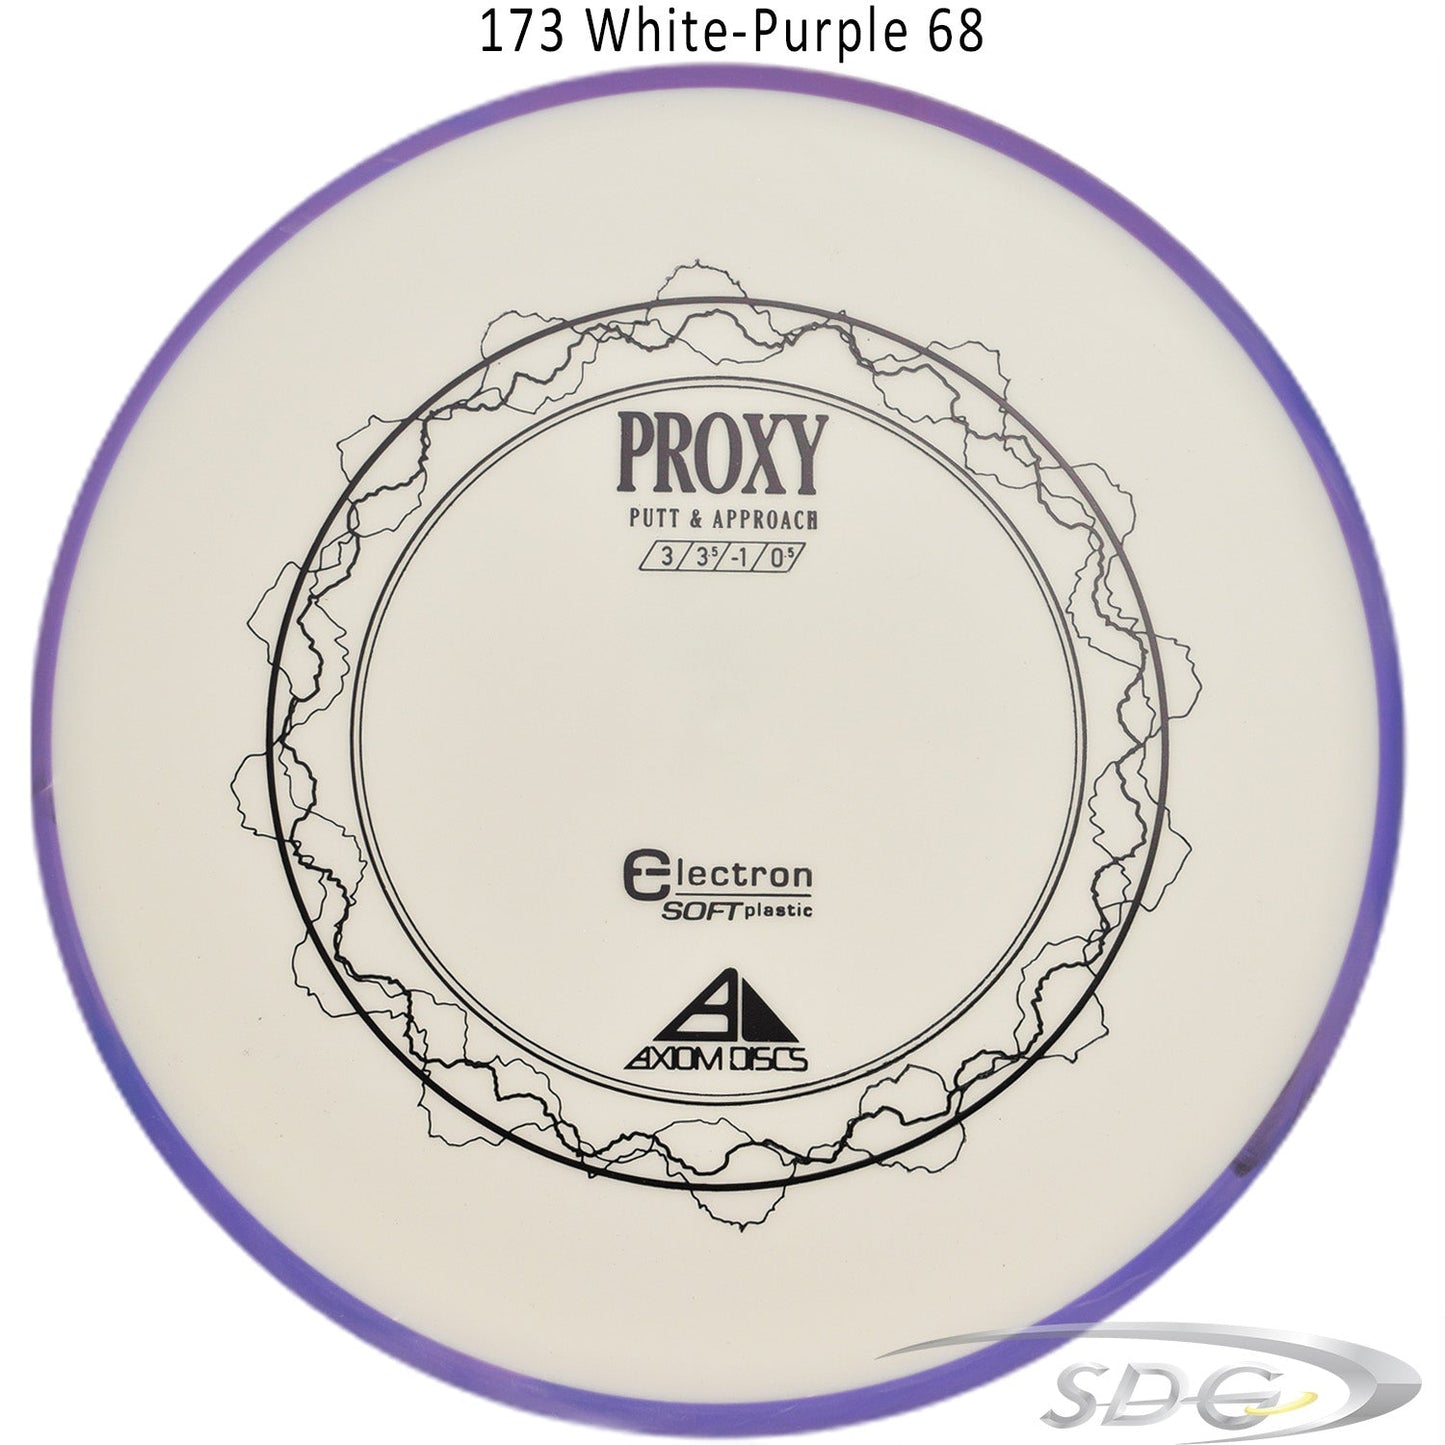 axiom-electron-proxy-soft-disc-golf-putt-approach 173 White-Purple 68 